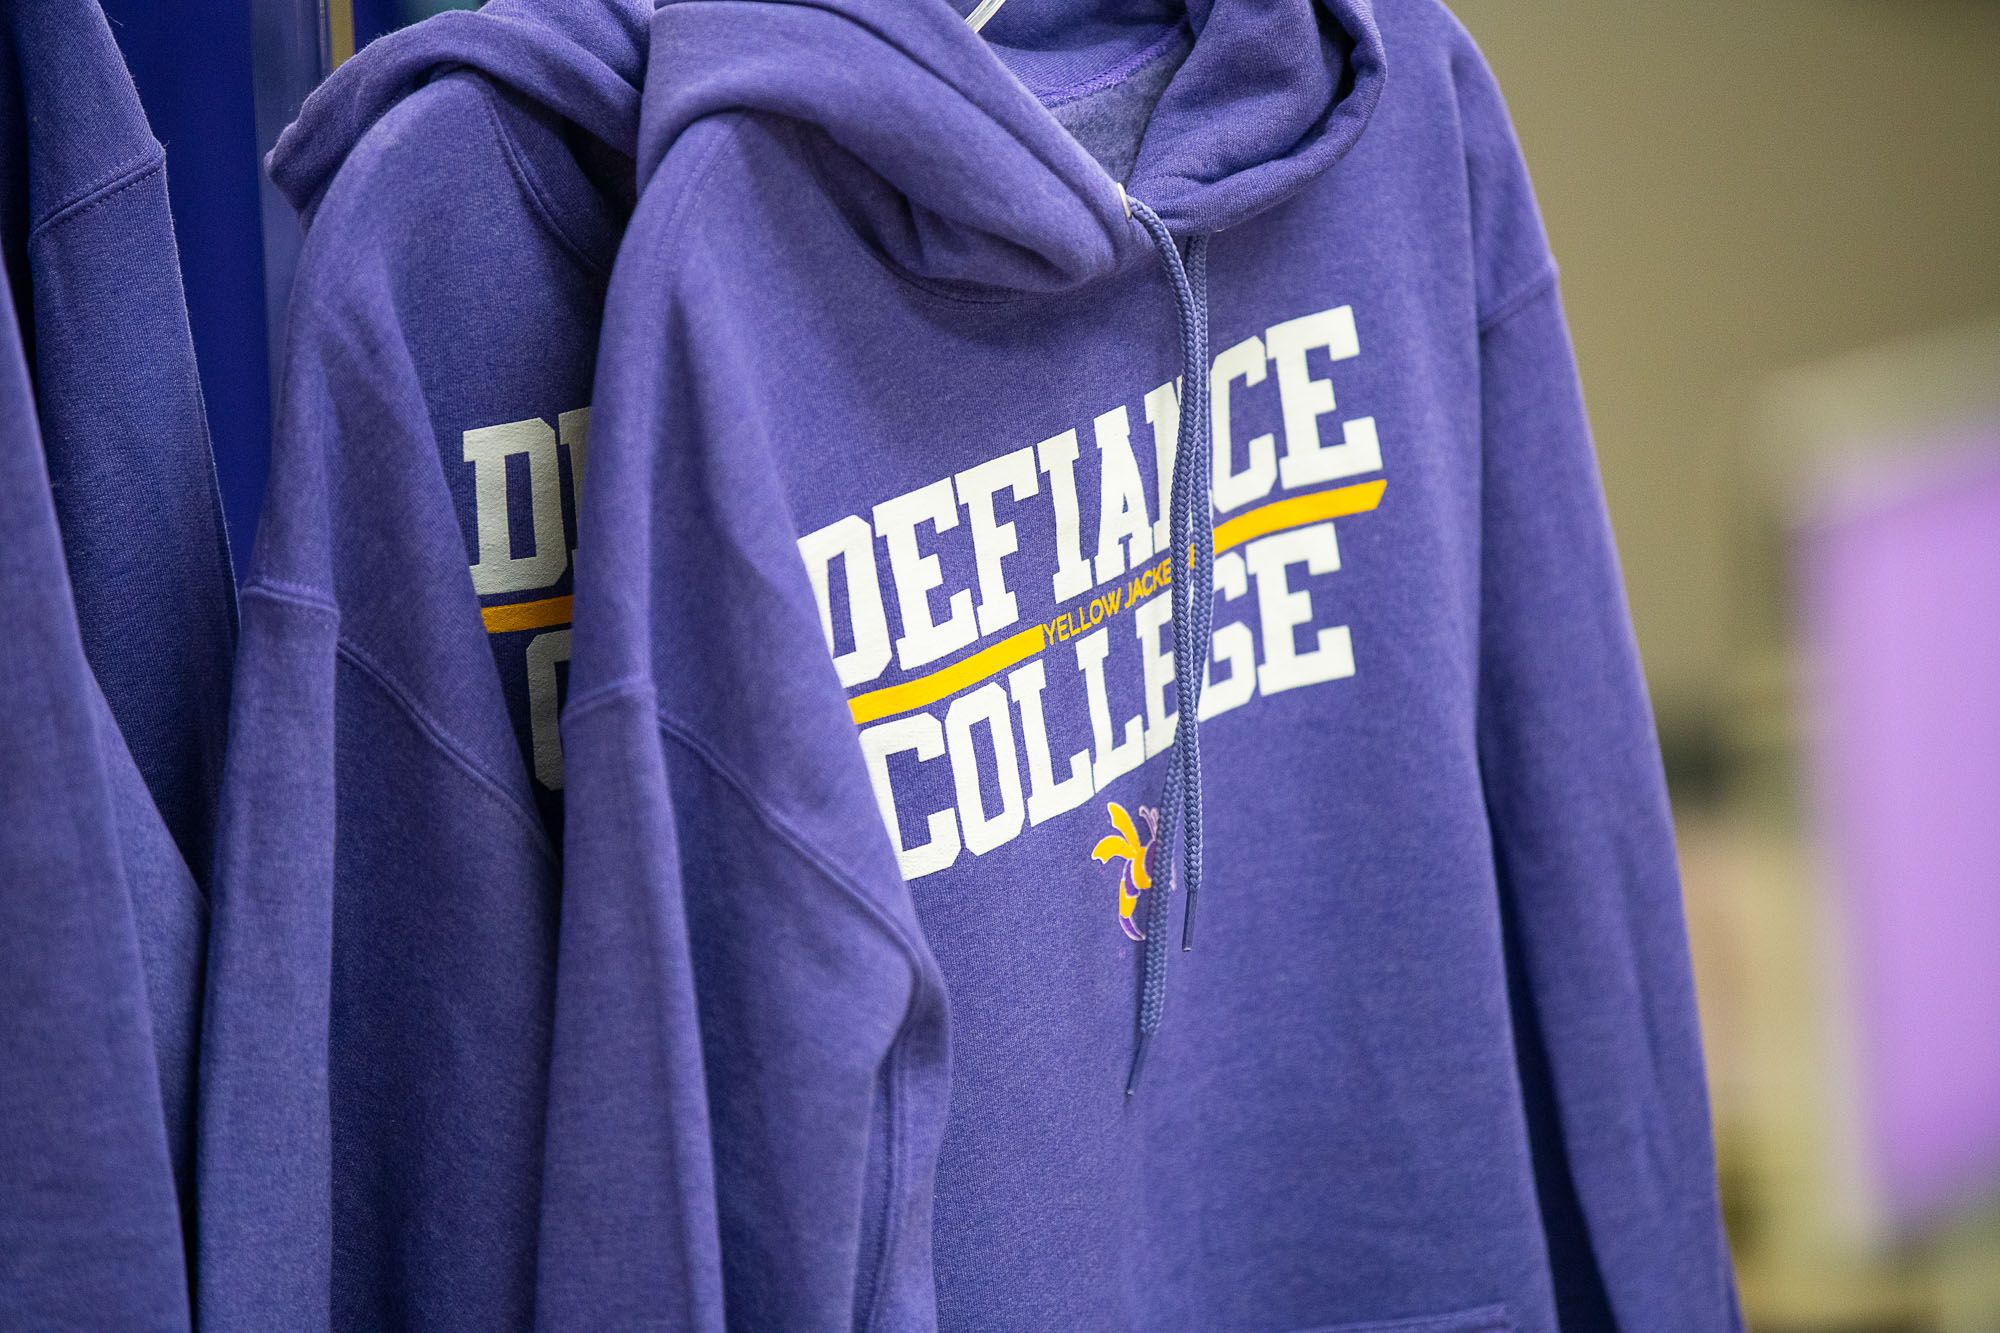 Defiance College Sweatshirts in bookstore